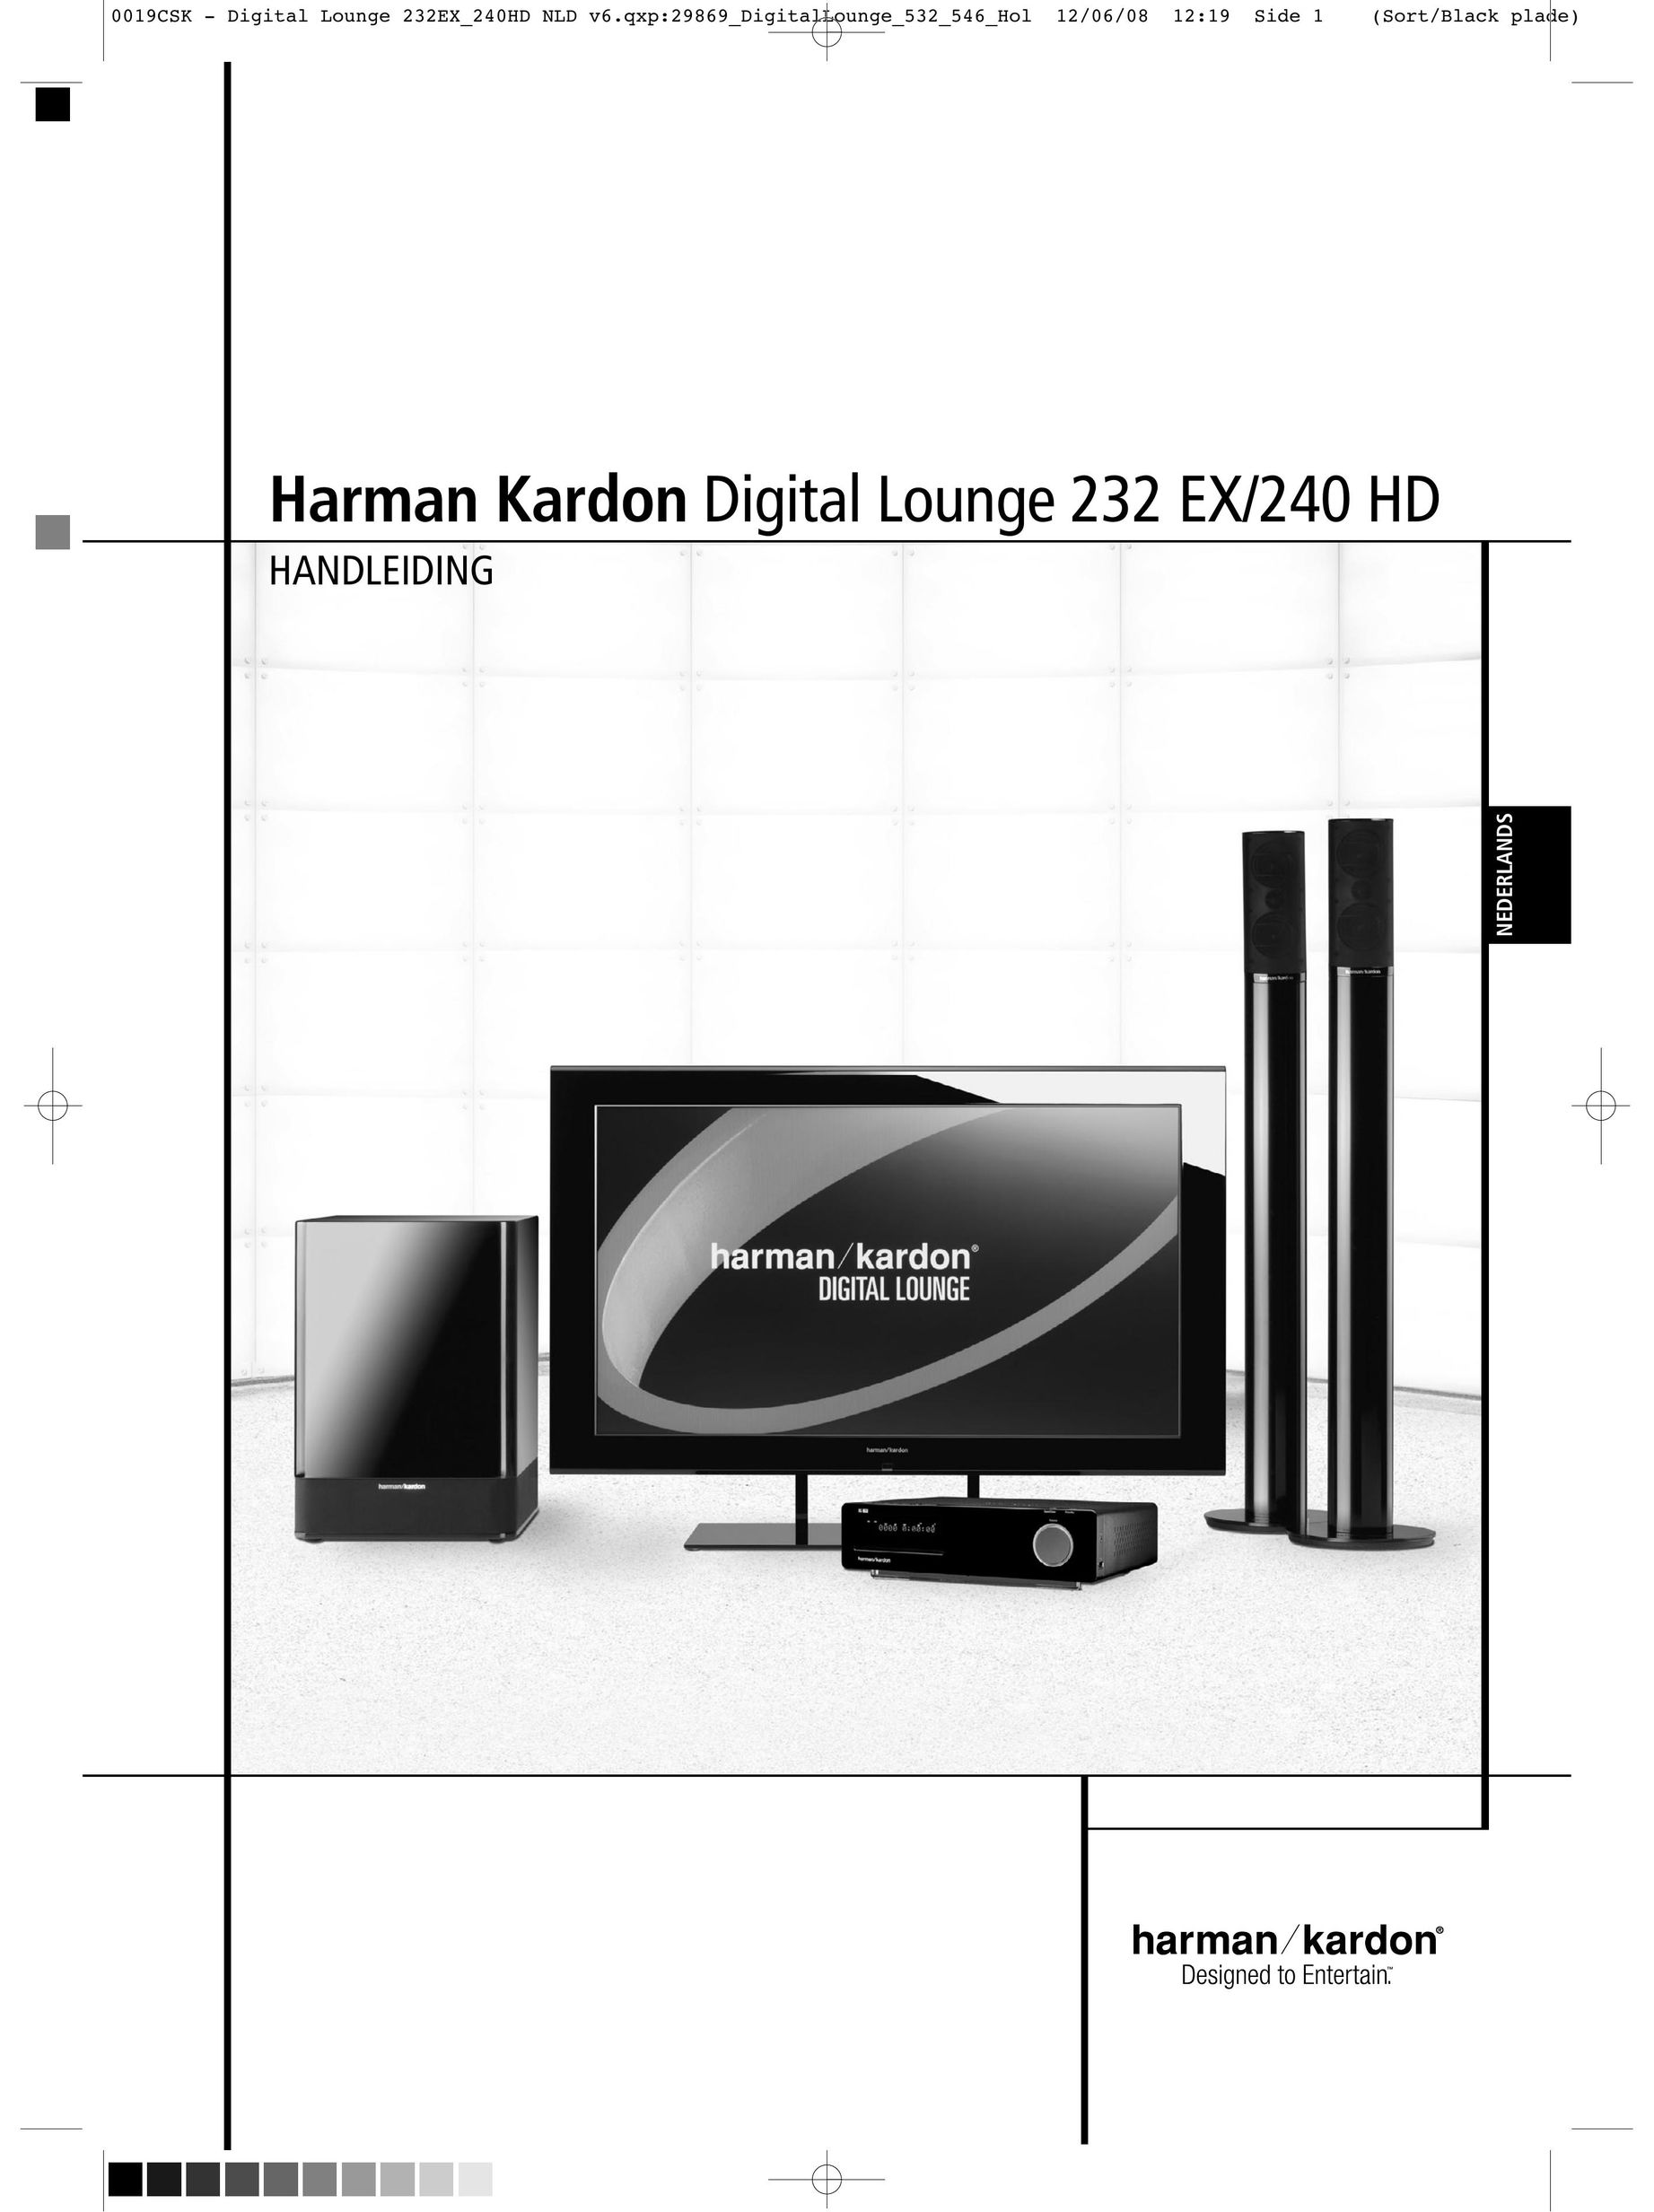 Harman-Kardon 232 EX/240 HD Home Theater System User Manual